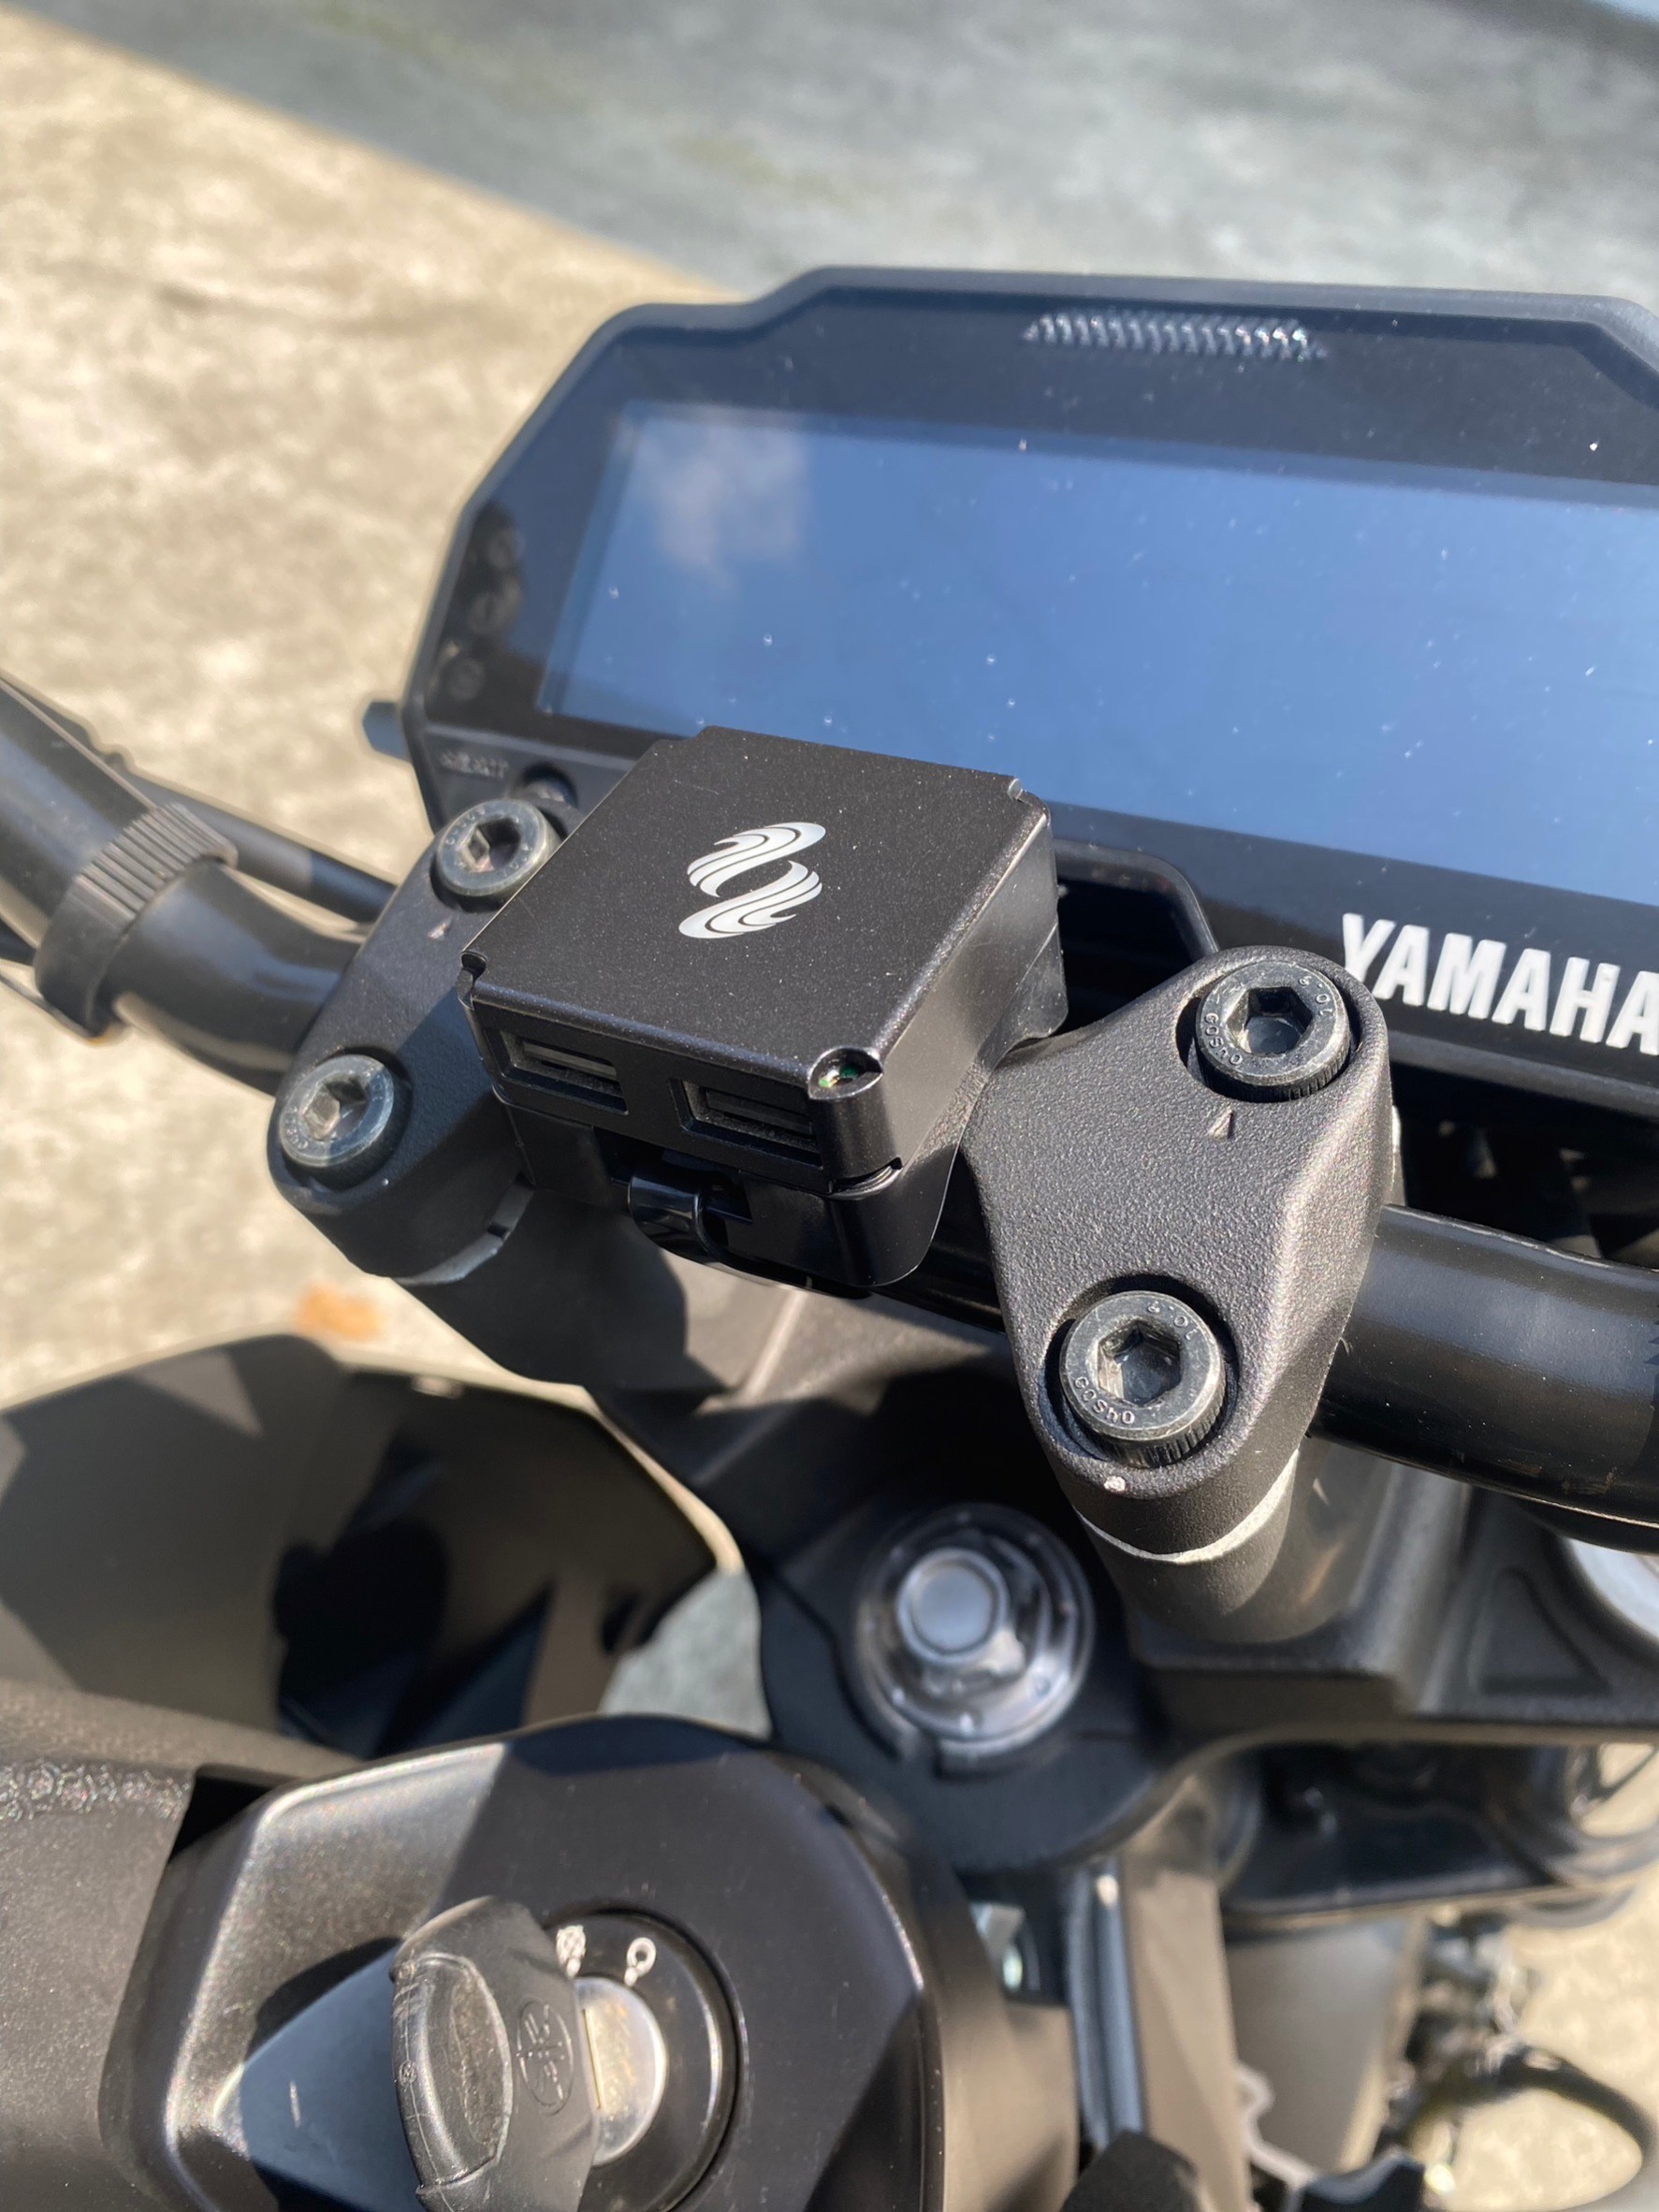 YAMAHA MT-15 - 中古/二手車出售中 MT15 基本改手機架、USB行車充電、水箱護網、短牌架 | Motoshen大聖二輪廣場